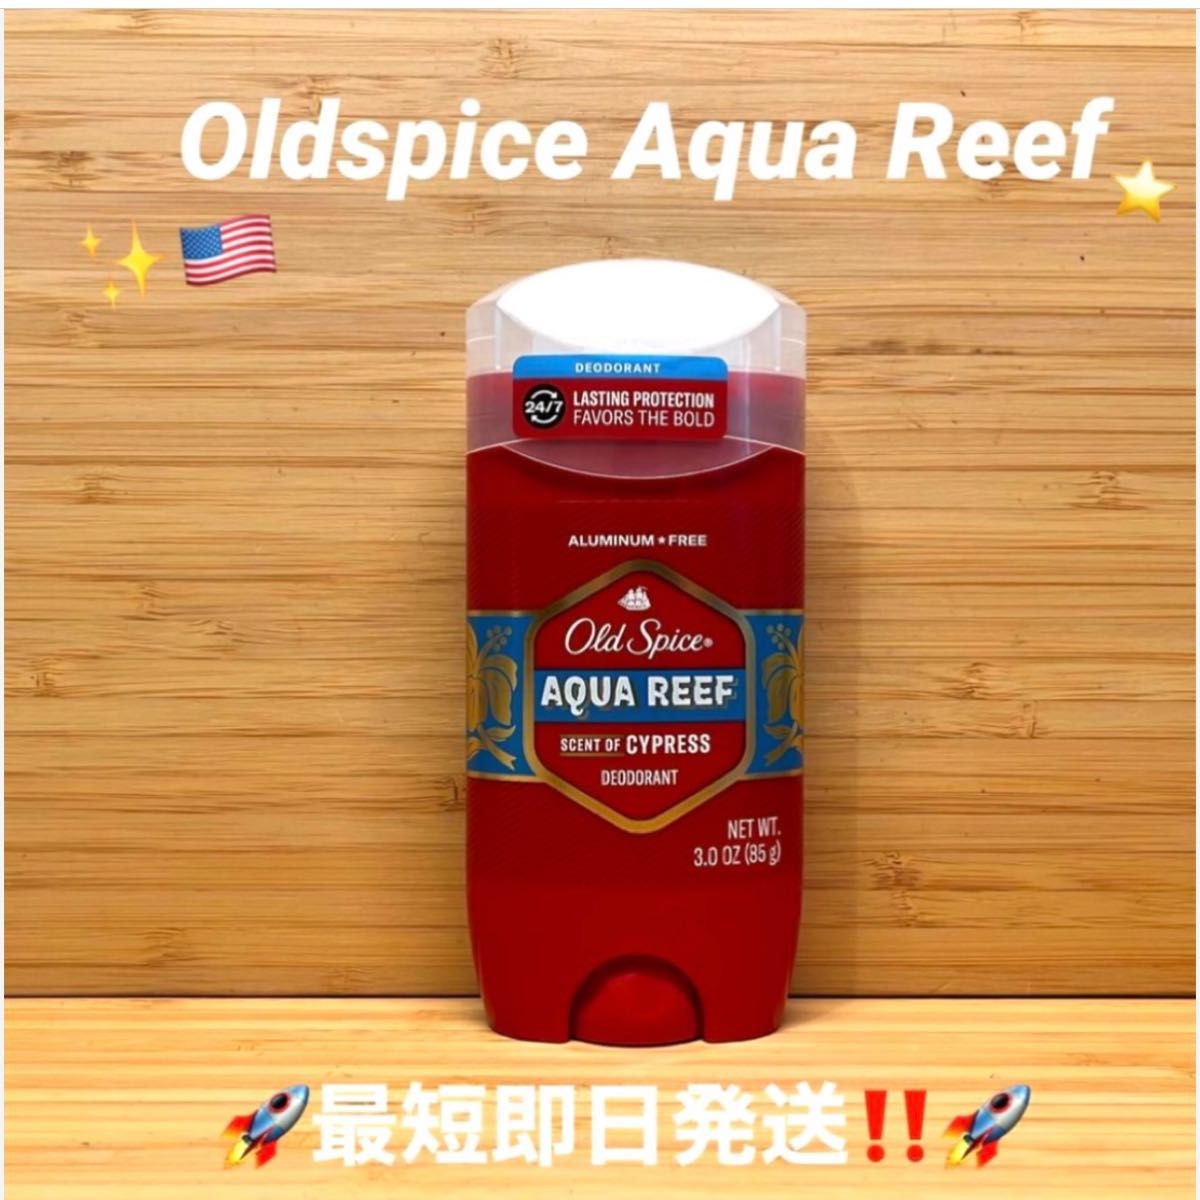 ☆ Oldspice Aqua Reef Aluminum Free オールドスパイス アクアリーフ アルミニウムフリー☆